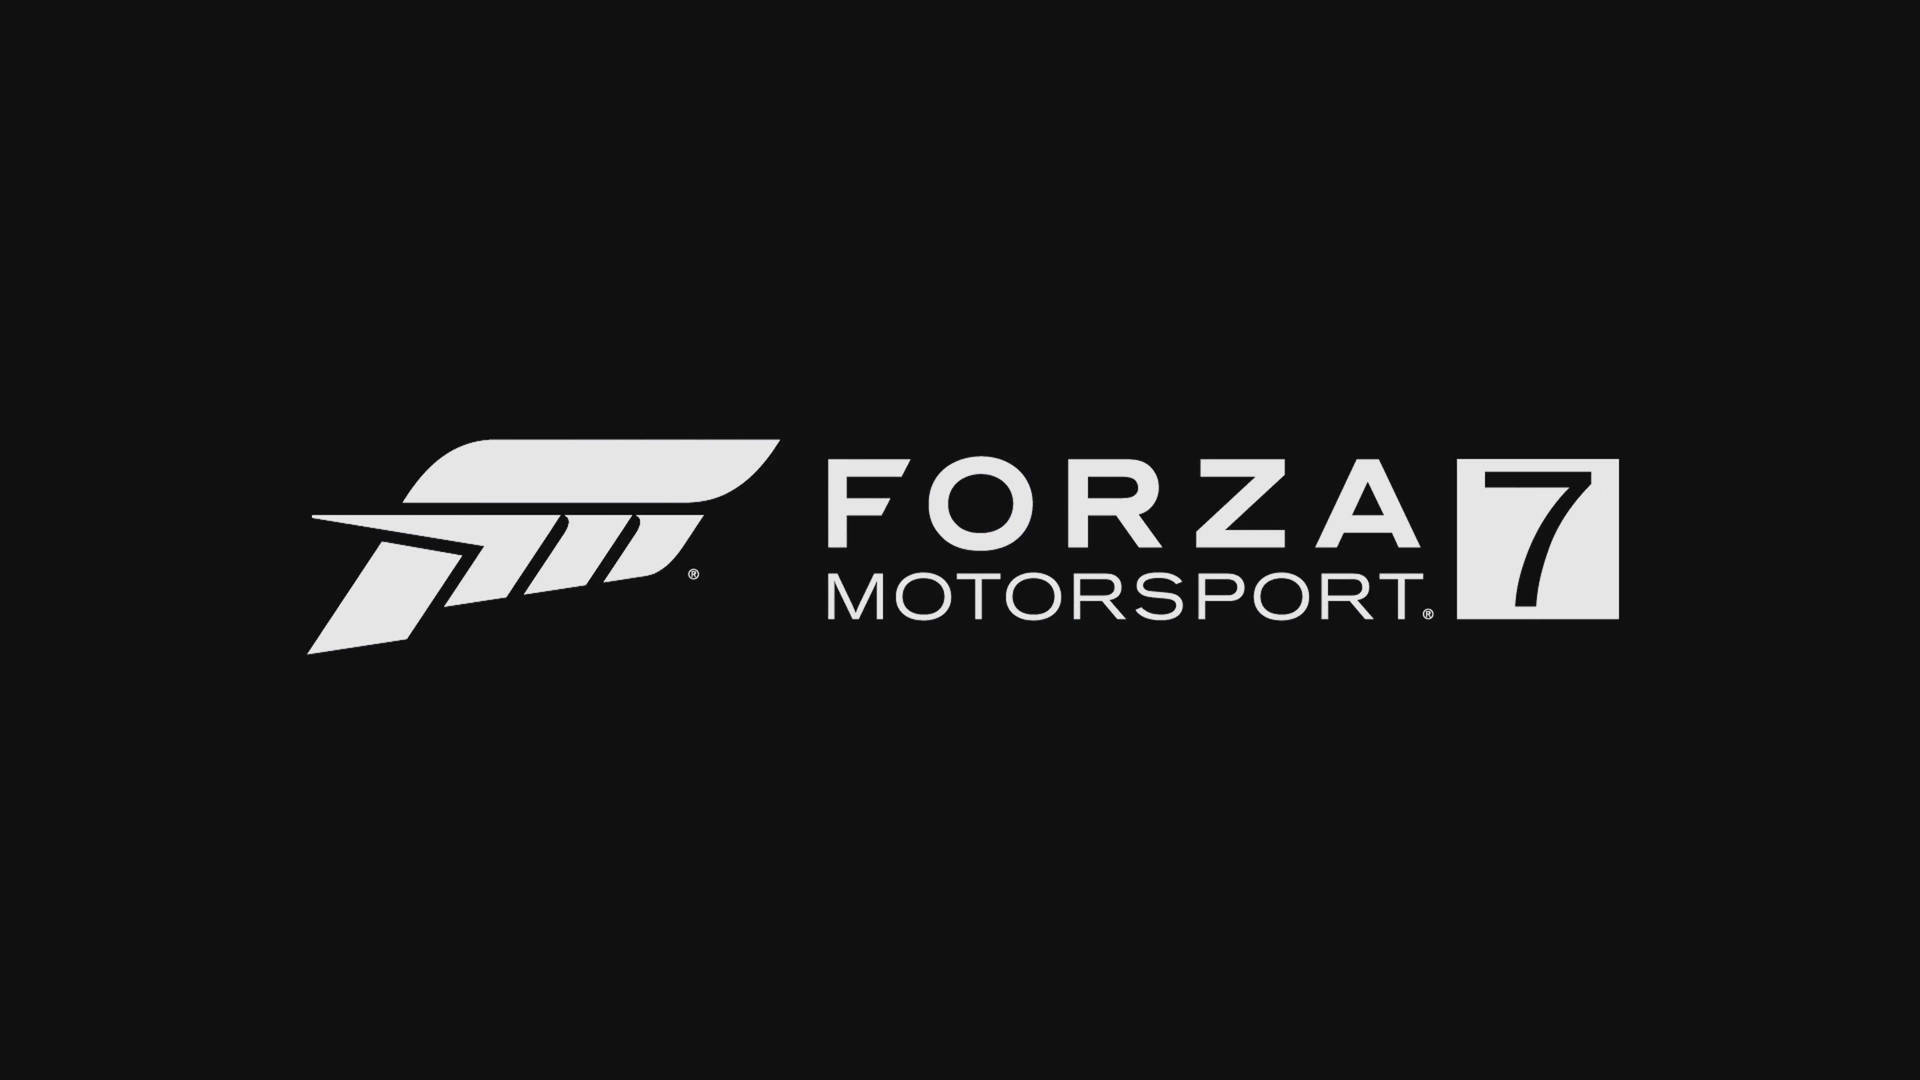 Logo Forza 7 Motorsport Sfondo